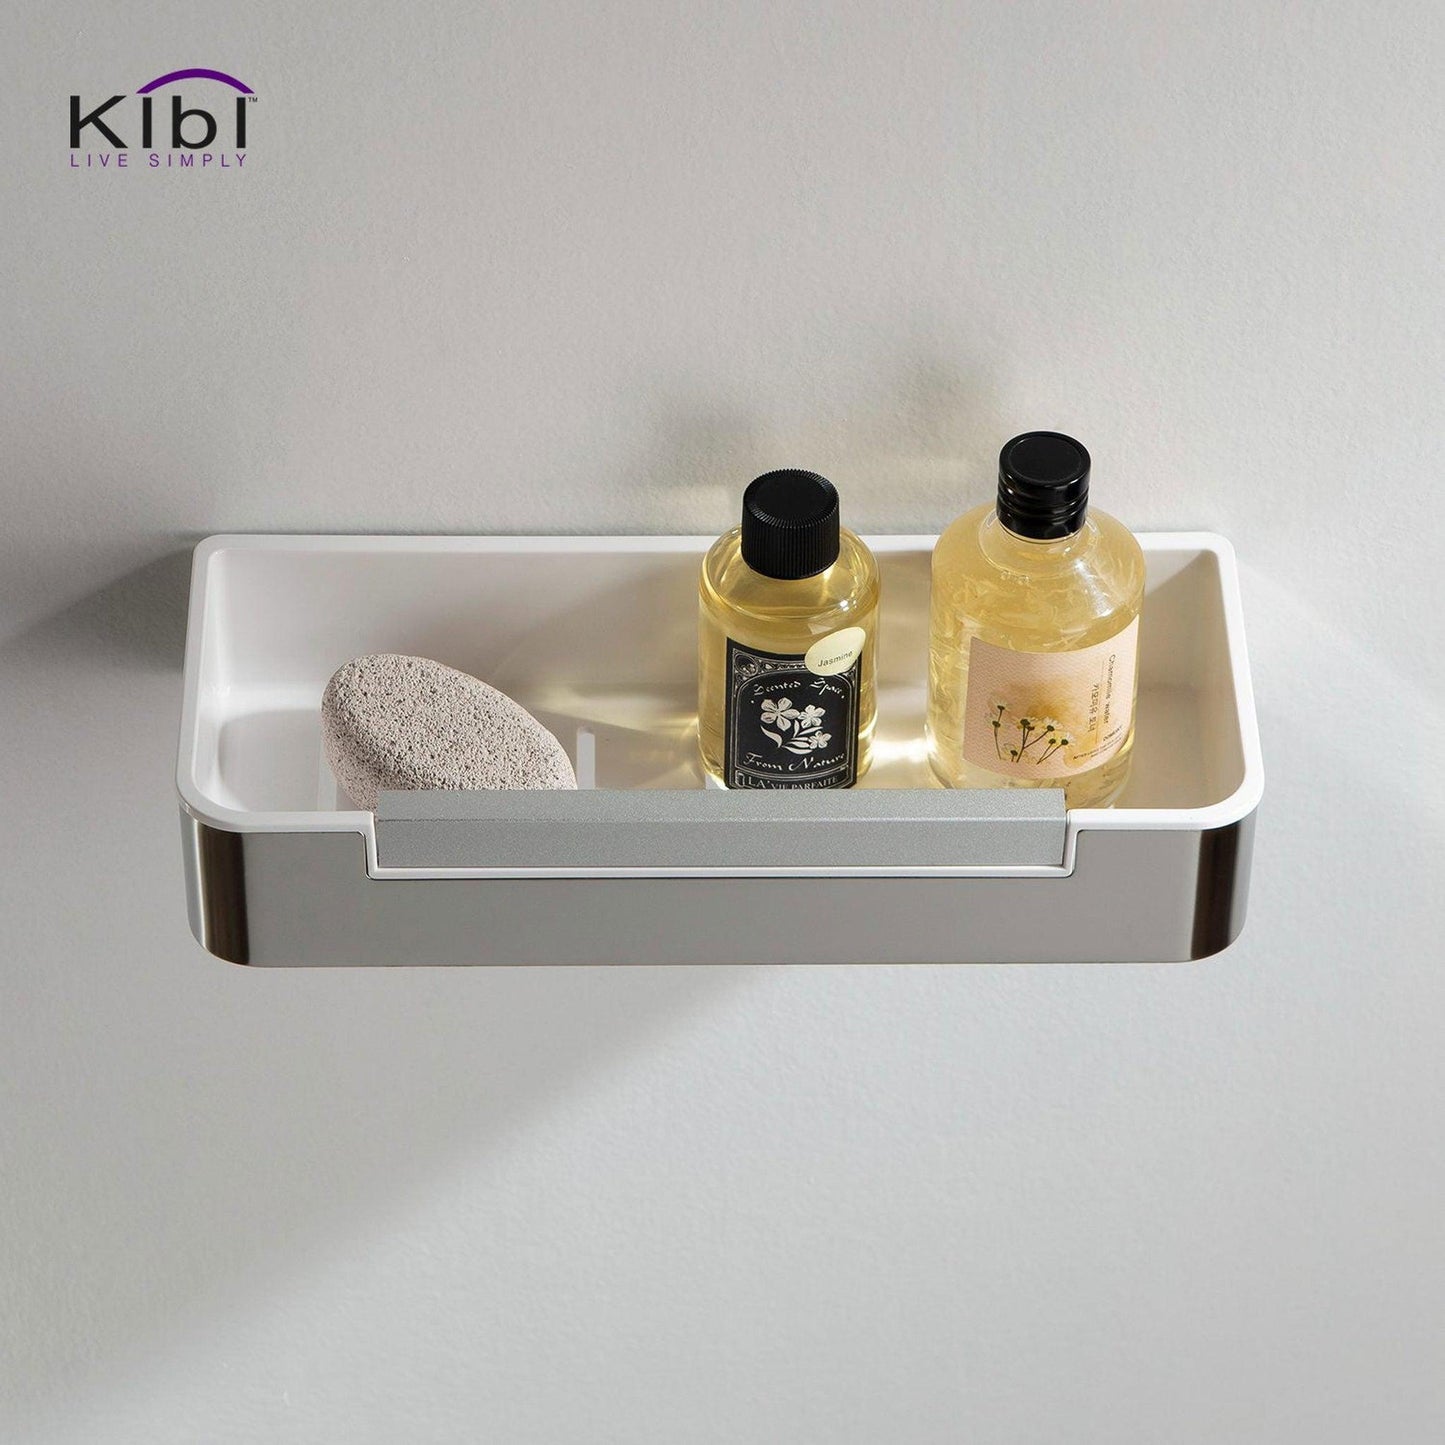 KIBI Deco Bathroom Shower Basket in Chrome Finish